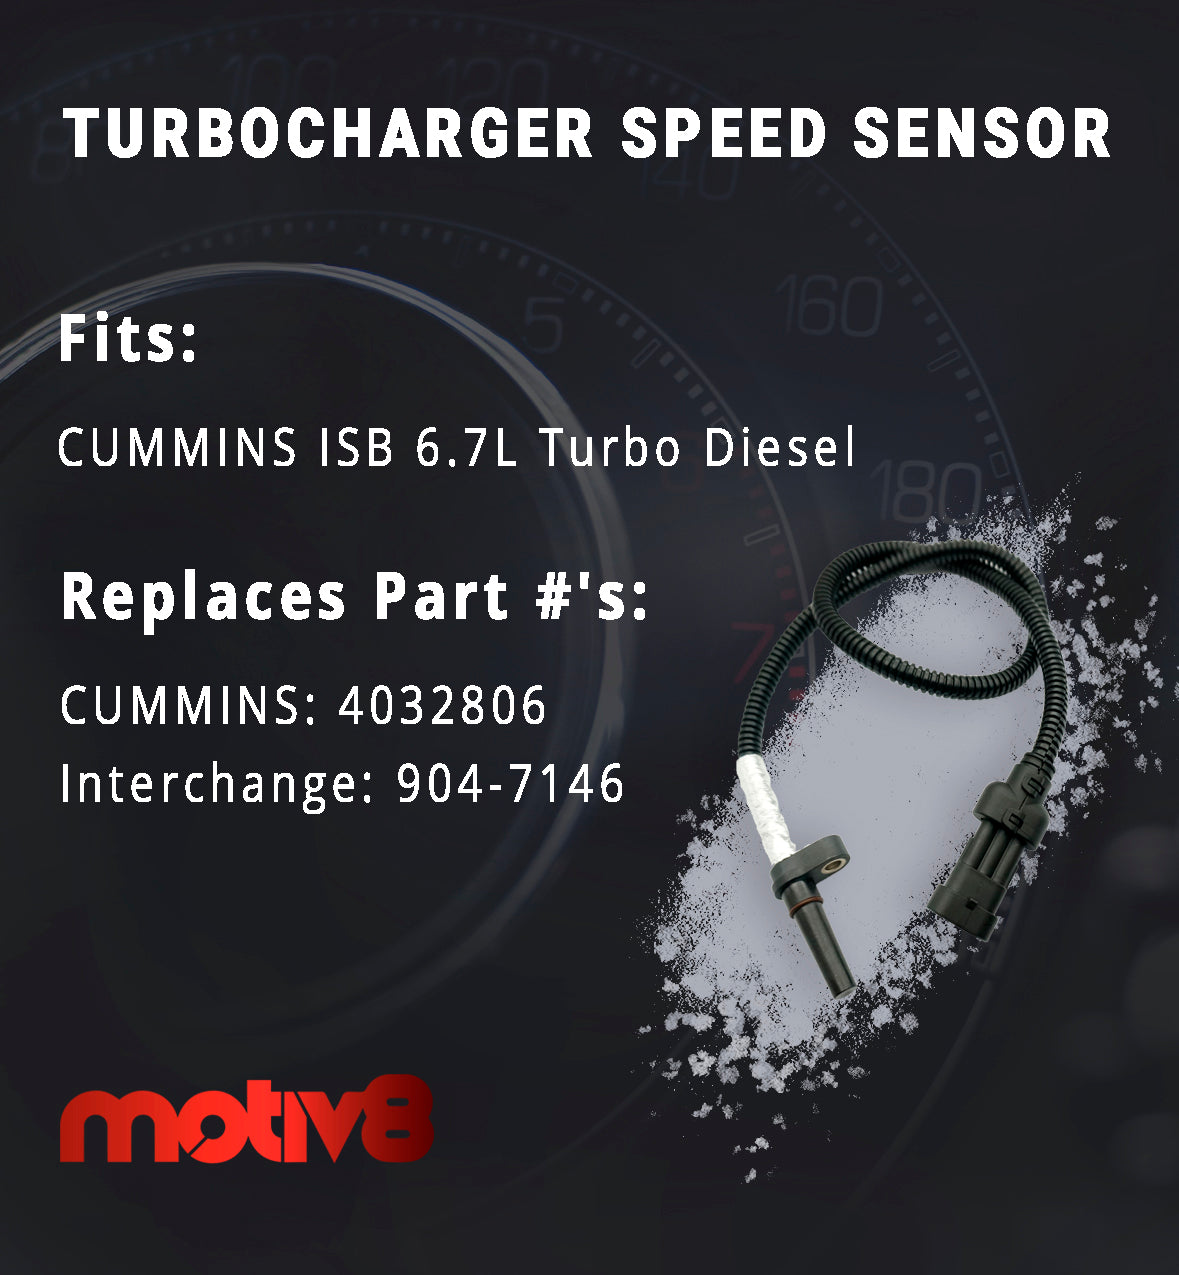 Turbocharger Speed Sensor for Cummins ISB 4032806 – MOTIV8 Engineering